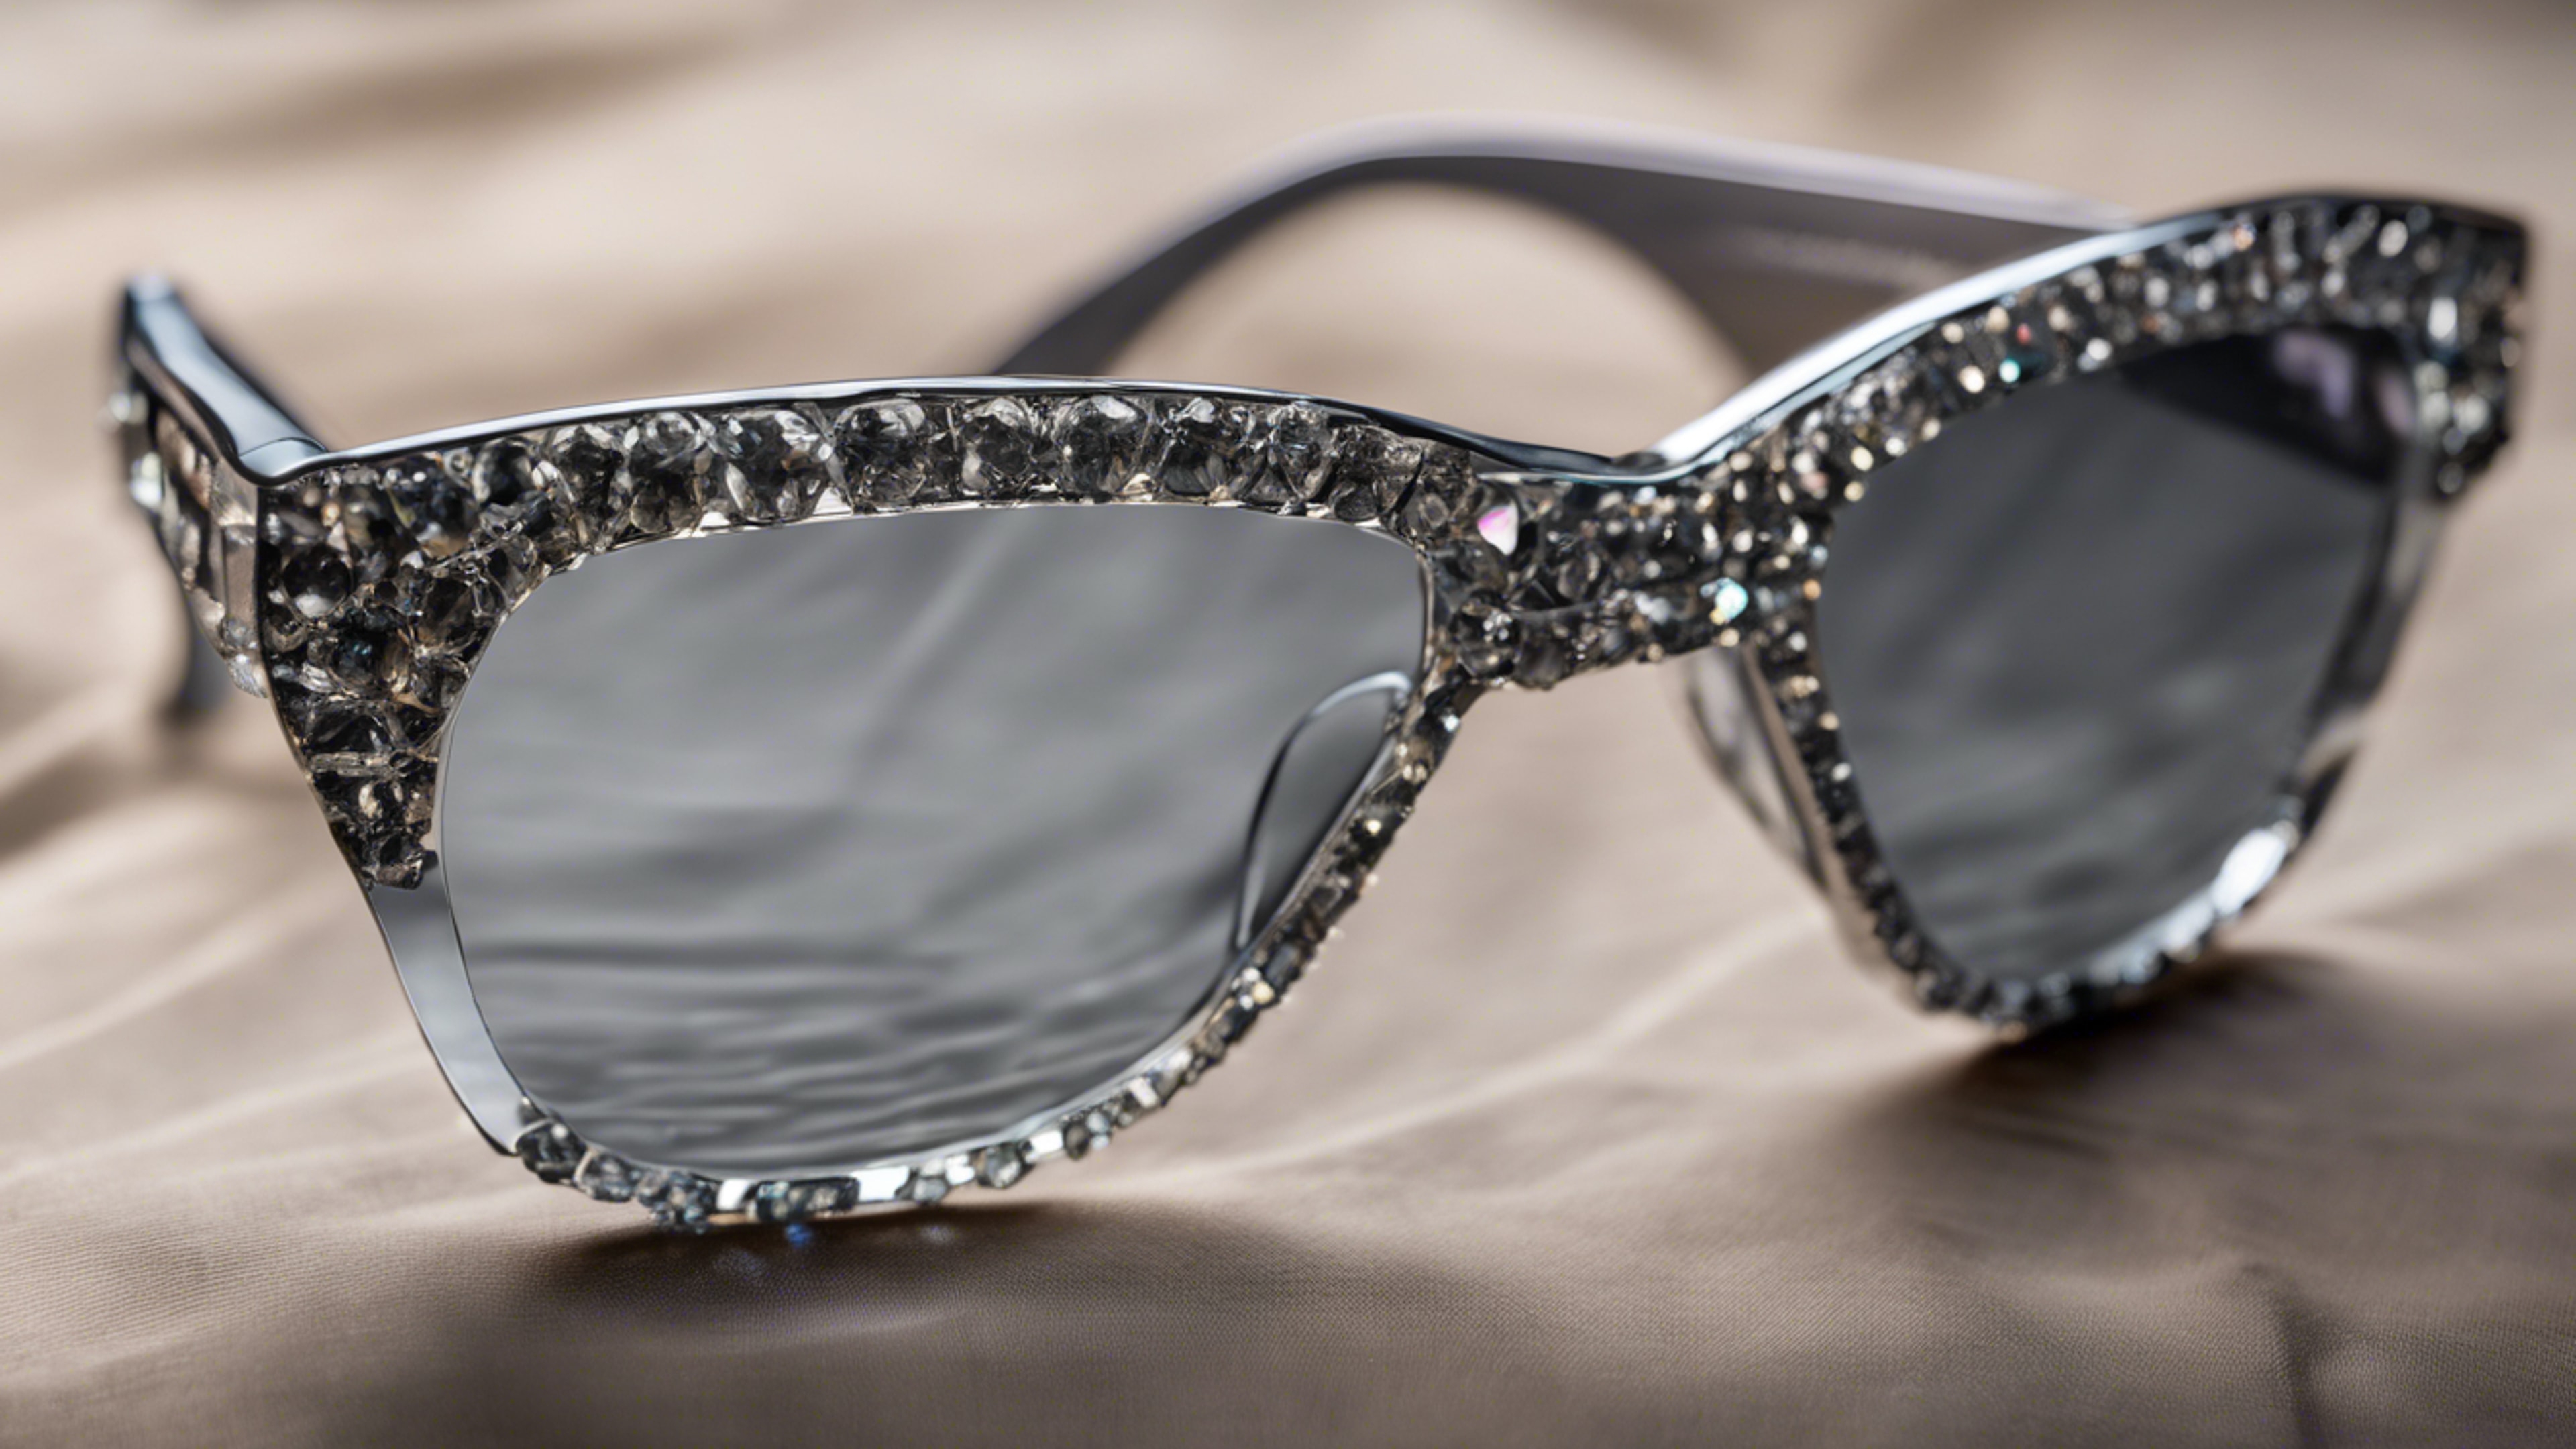 A pair of gray diamond encrusted glasses, epitomizing luxury and status. Hintergrund[6d0b74d92658455f9dbd]